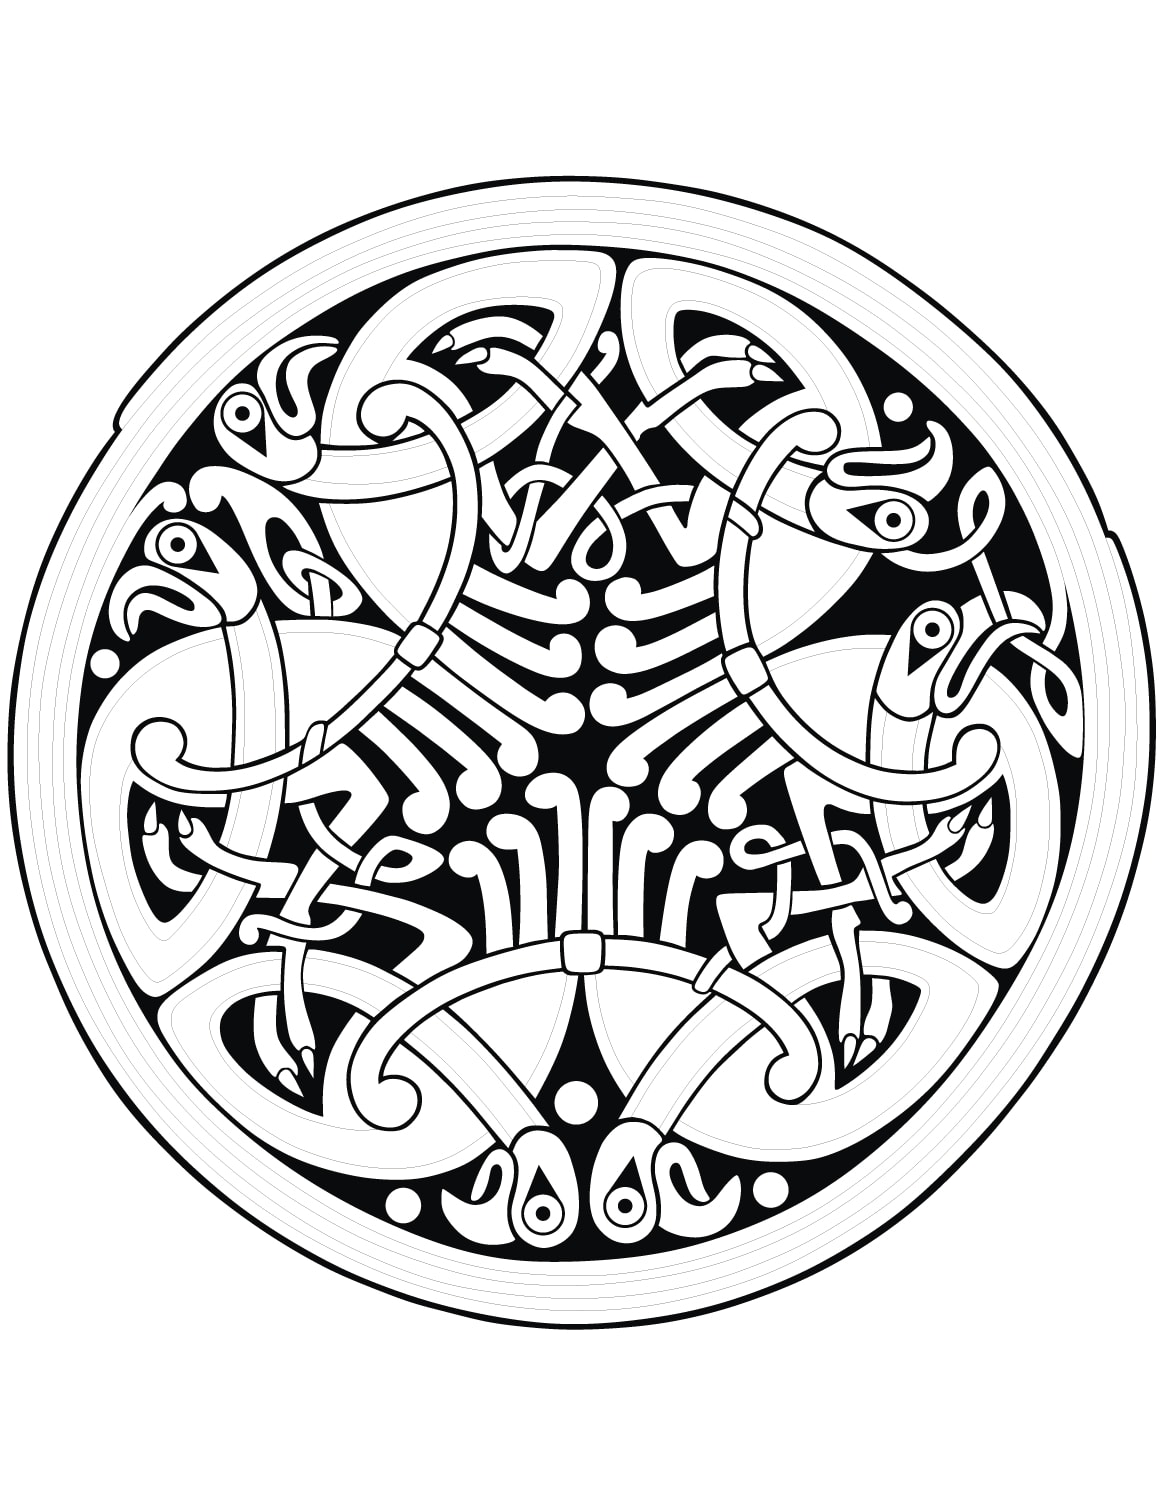 Celtic art design looking like a Mandala